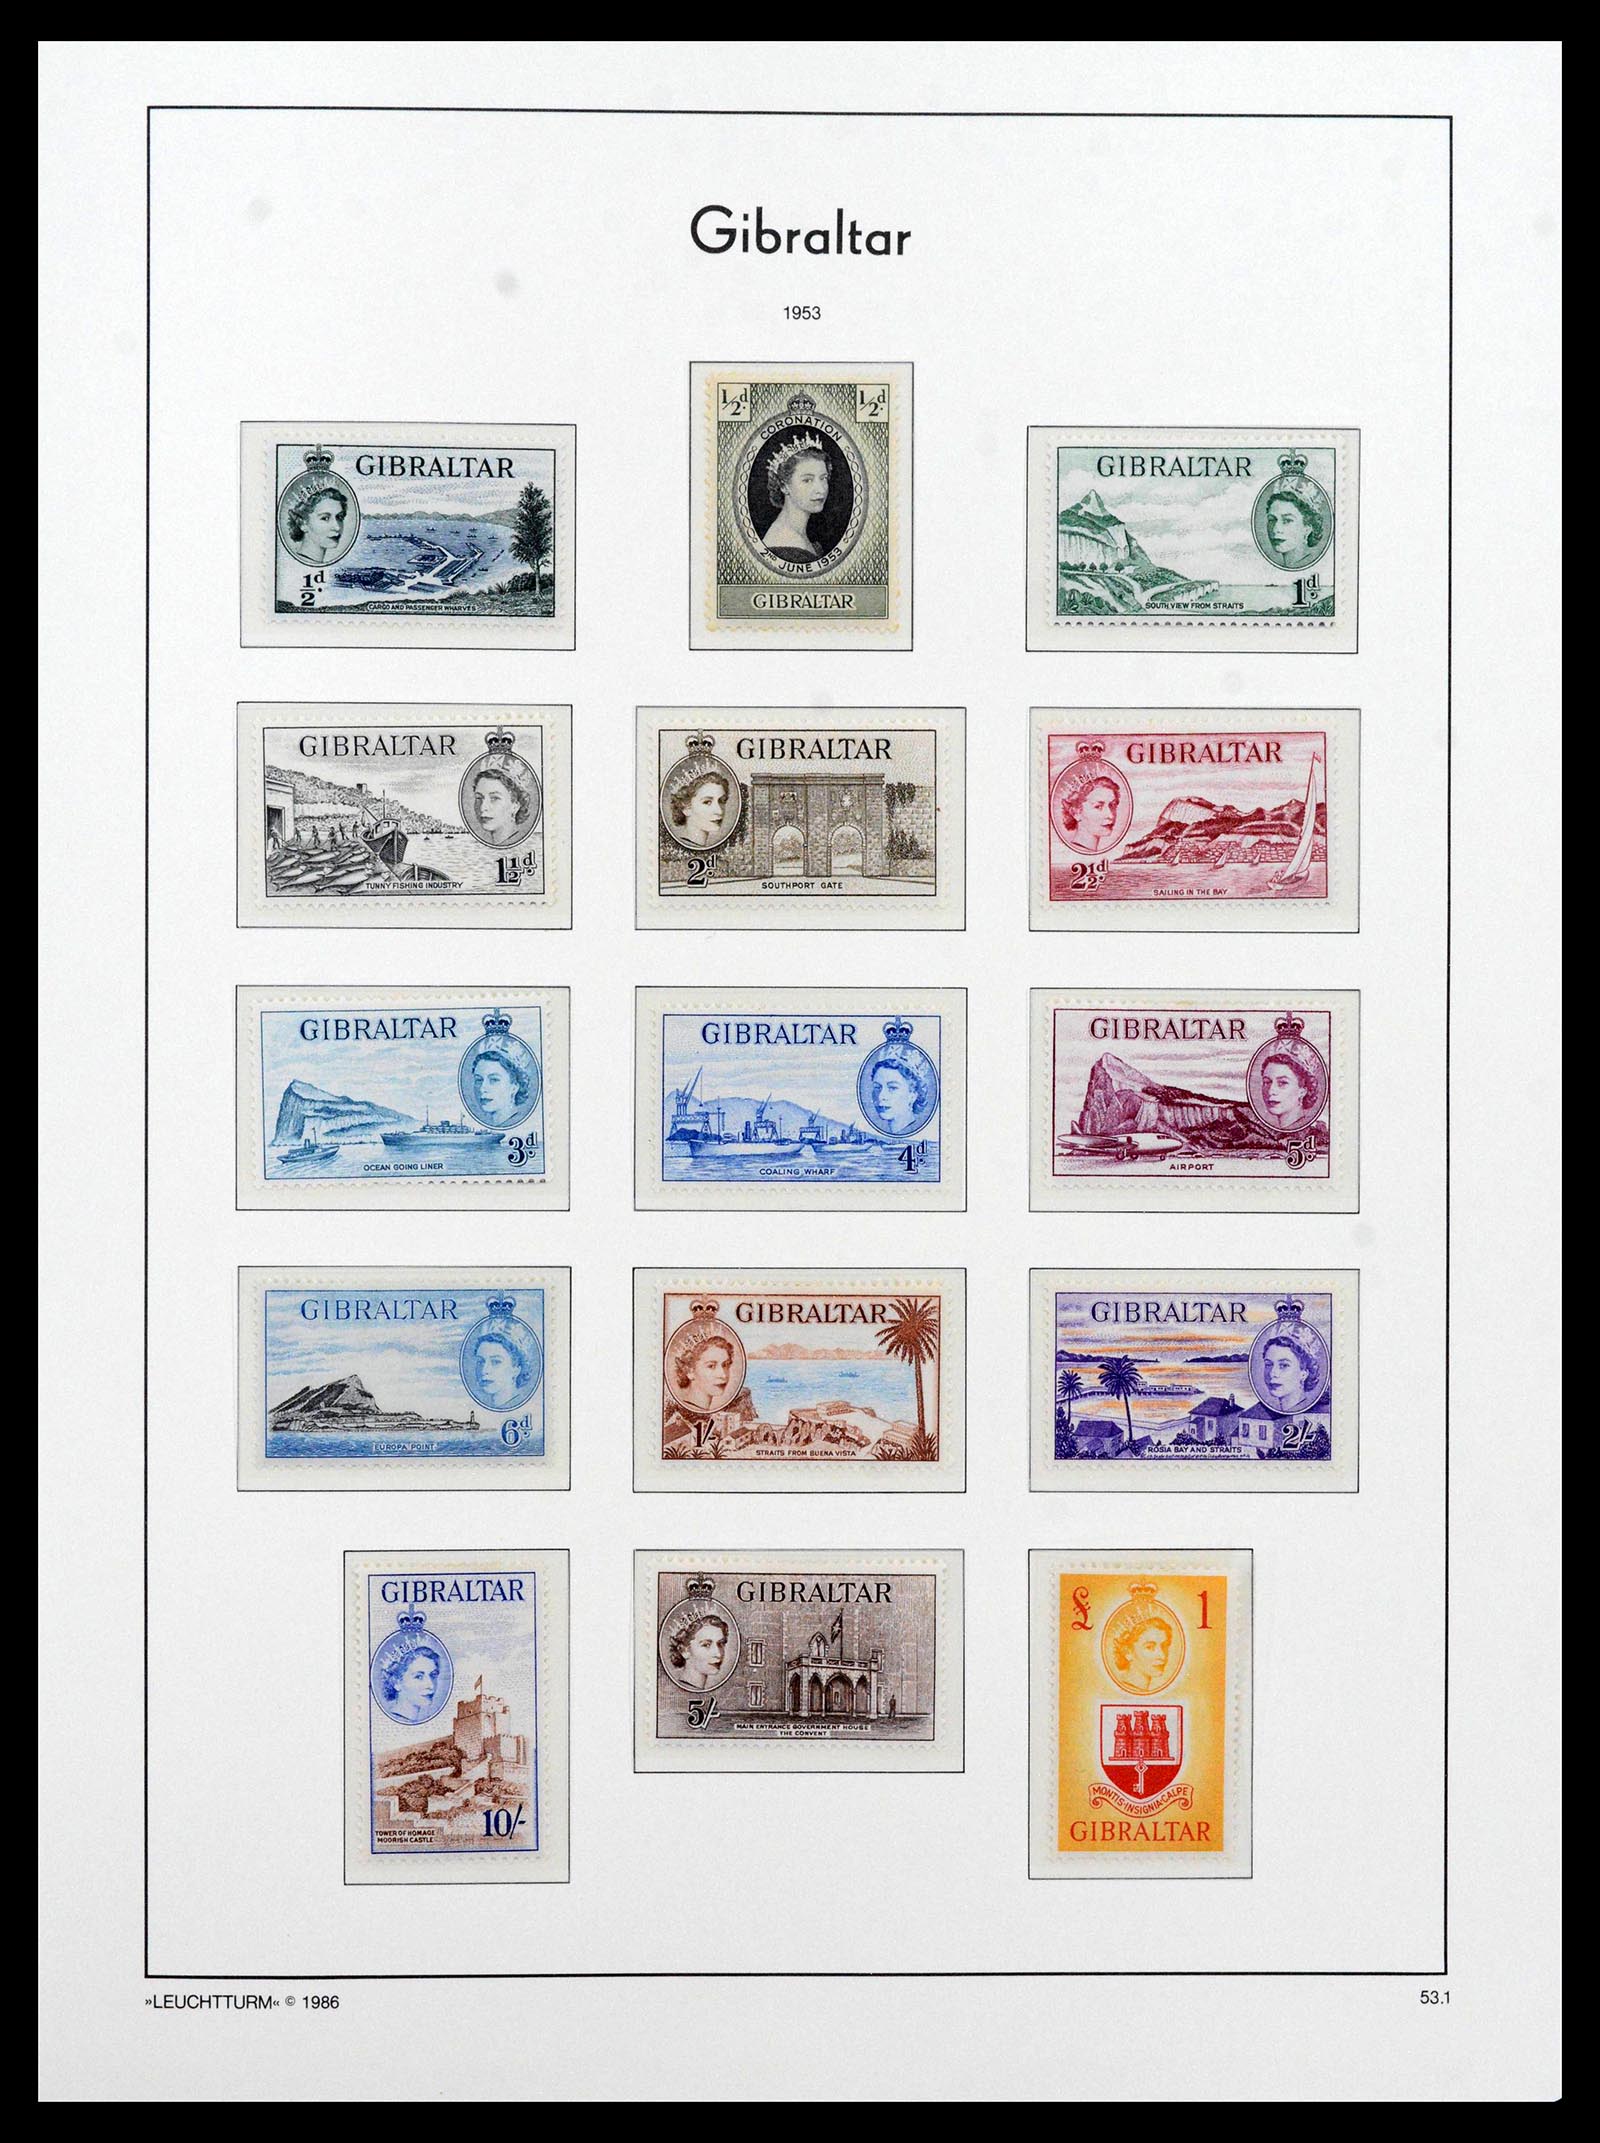 39158 0013 - Stamp collection 39158 Gibraltar 1886-2013.